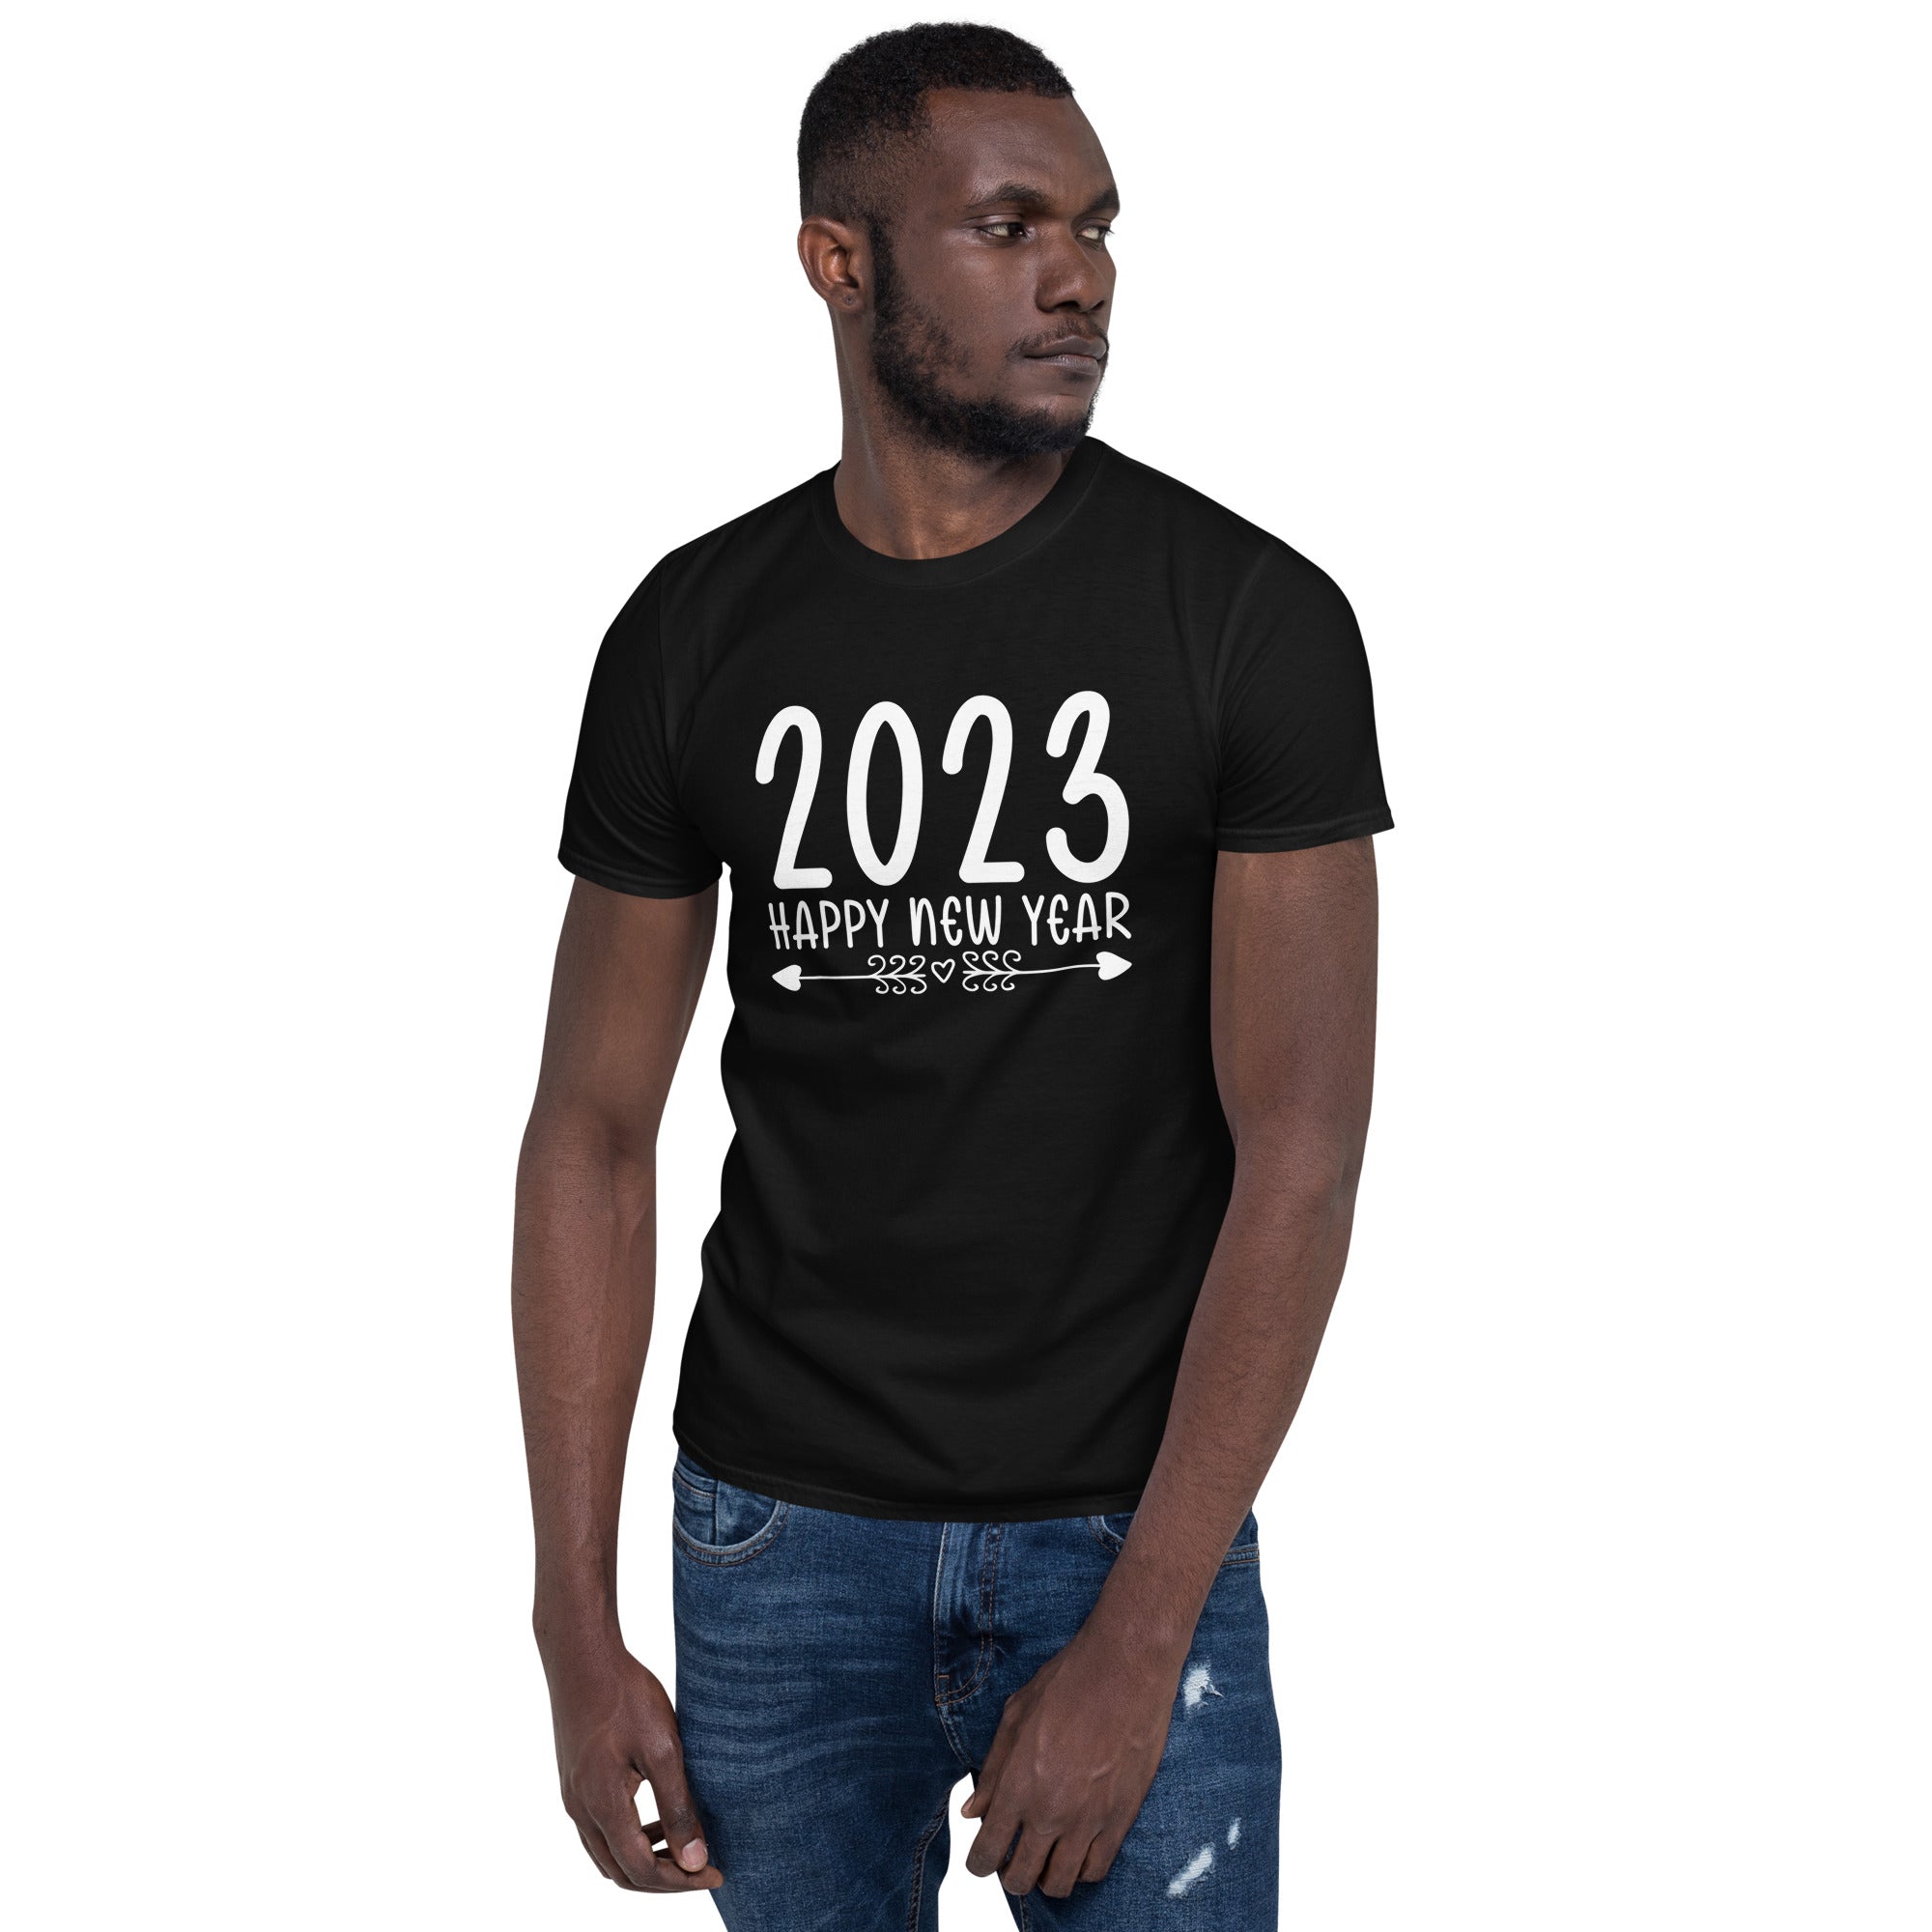 2023 Happy New Year - Short-Sleeve Unisex T-Shirt